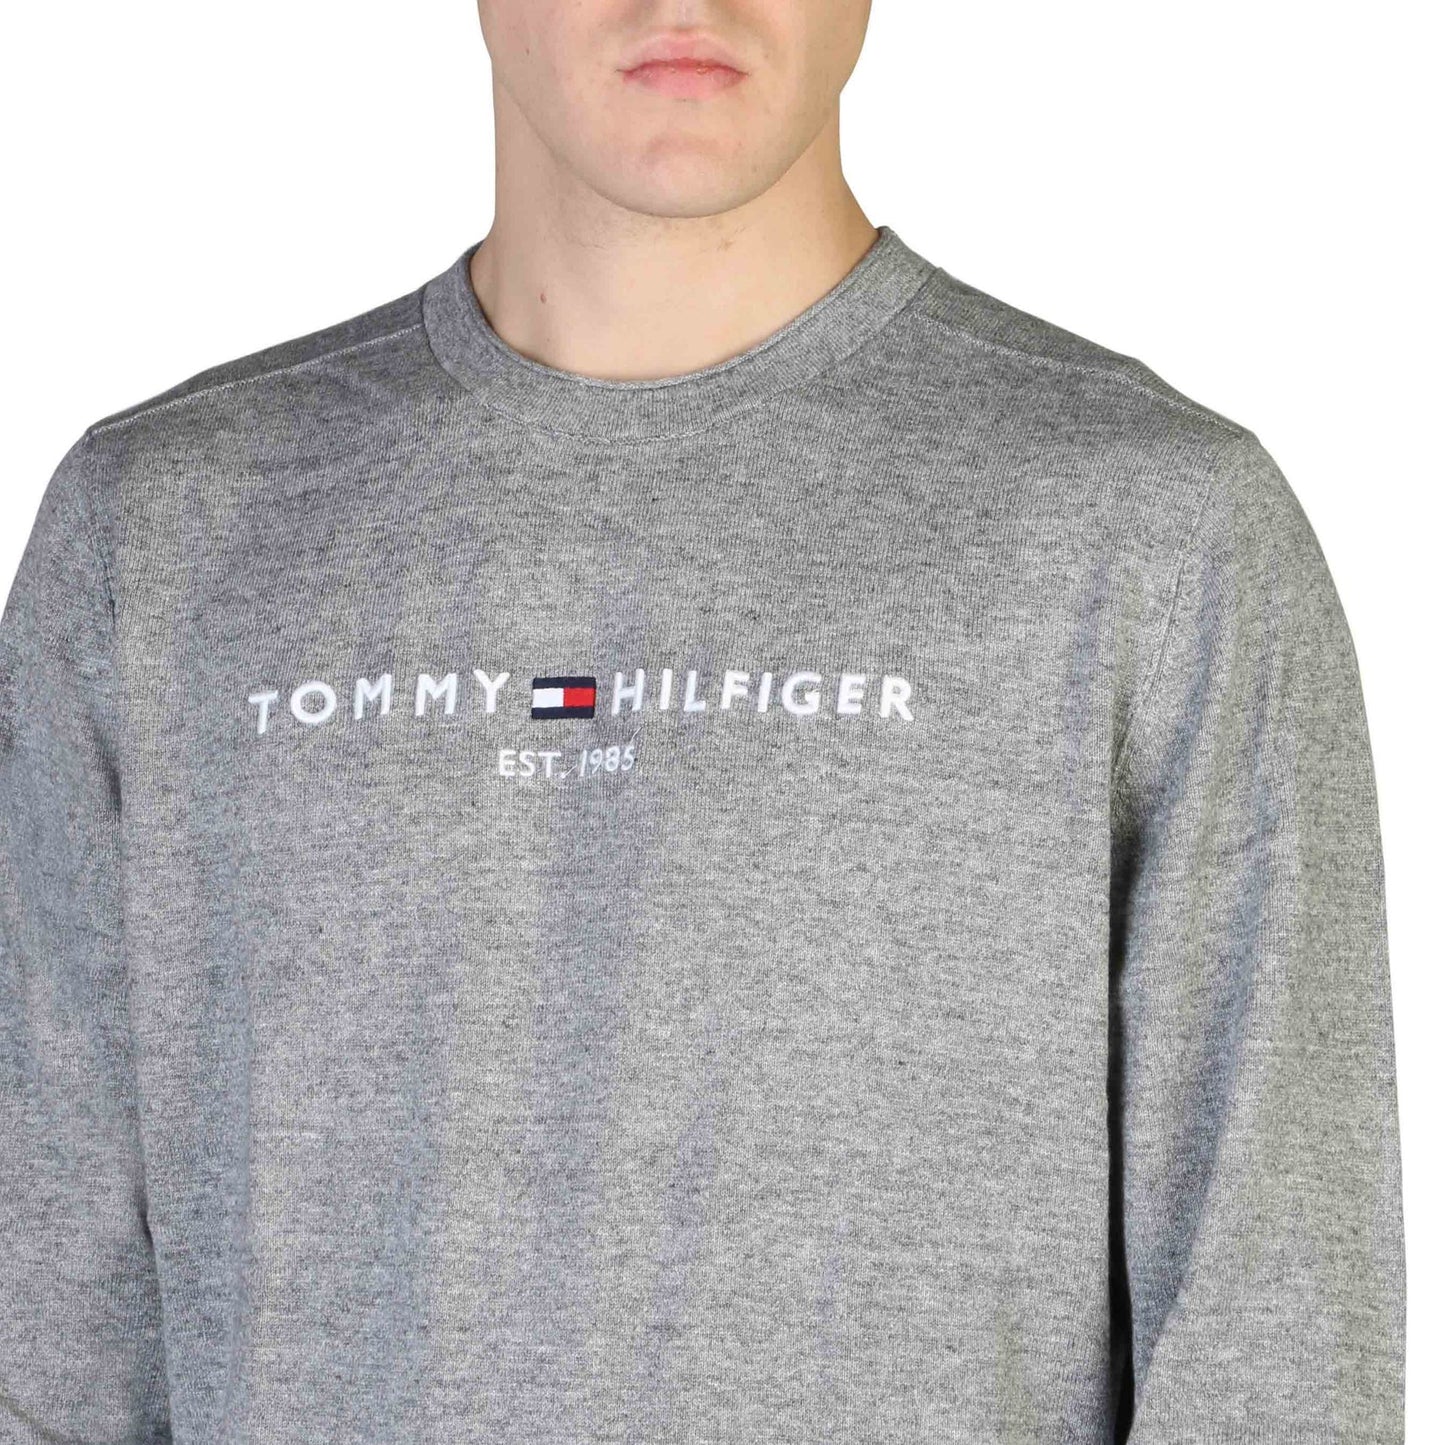 Tommy Hilfiger Pullover